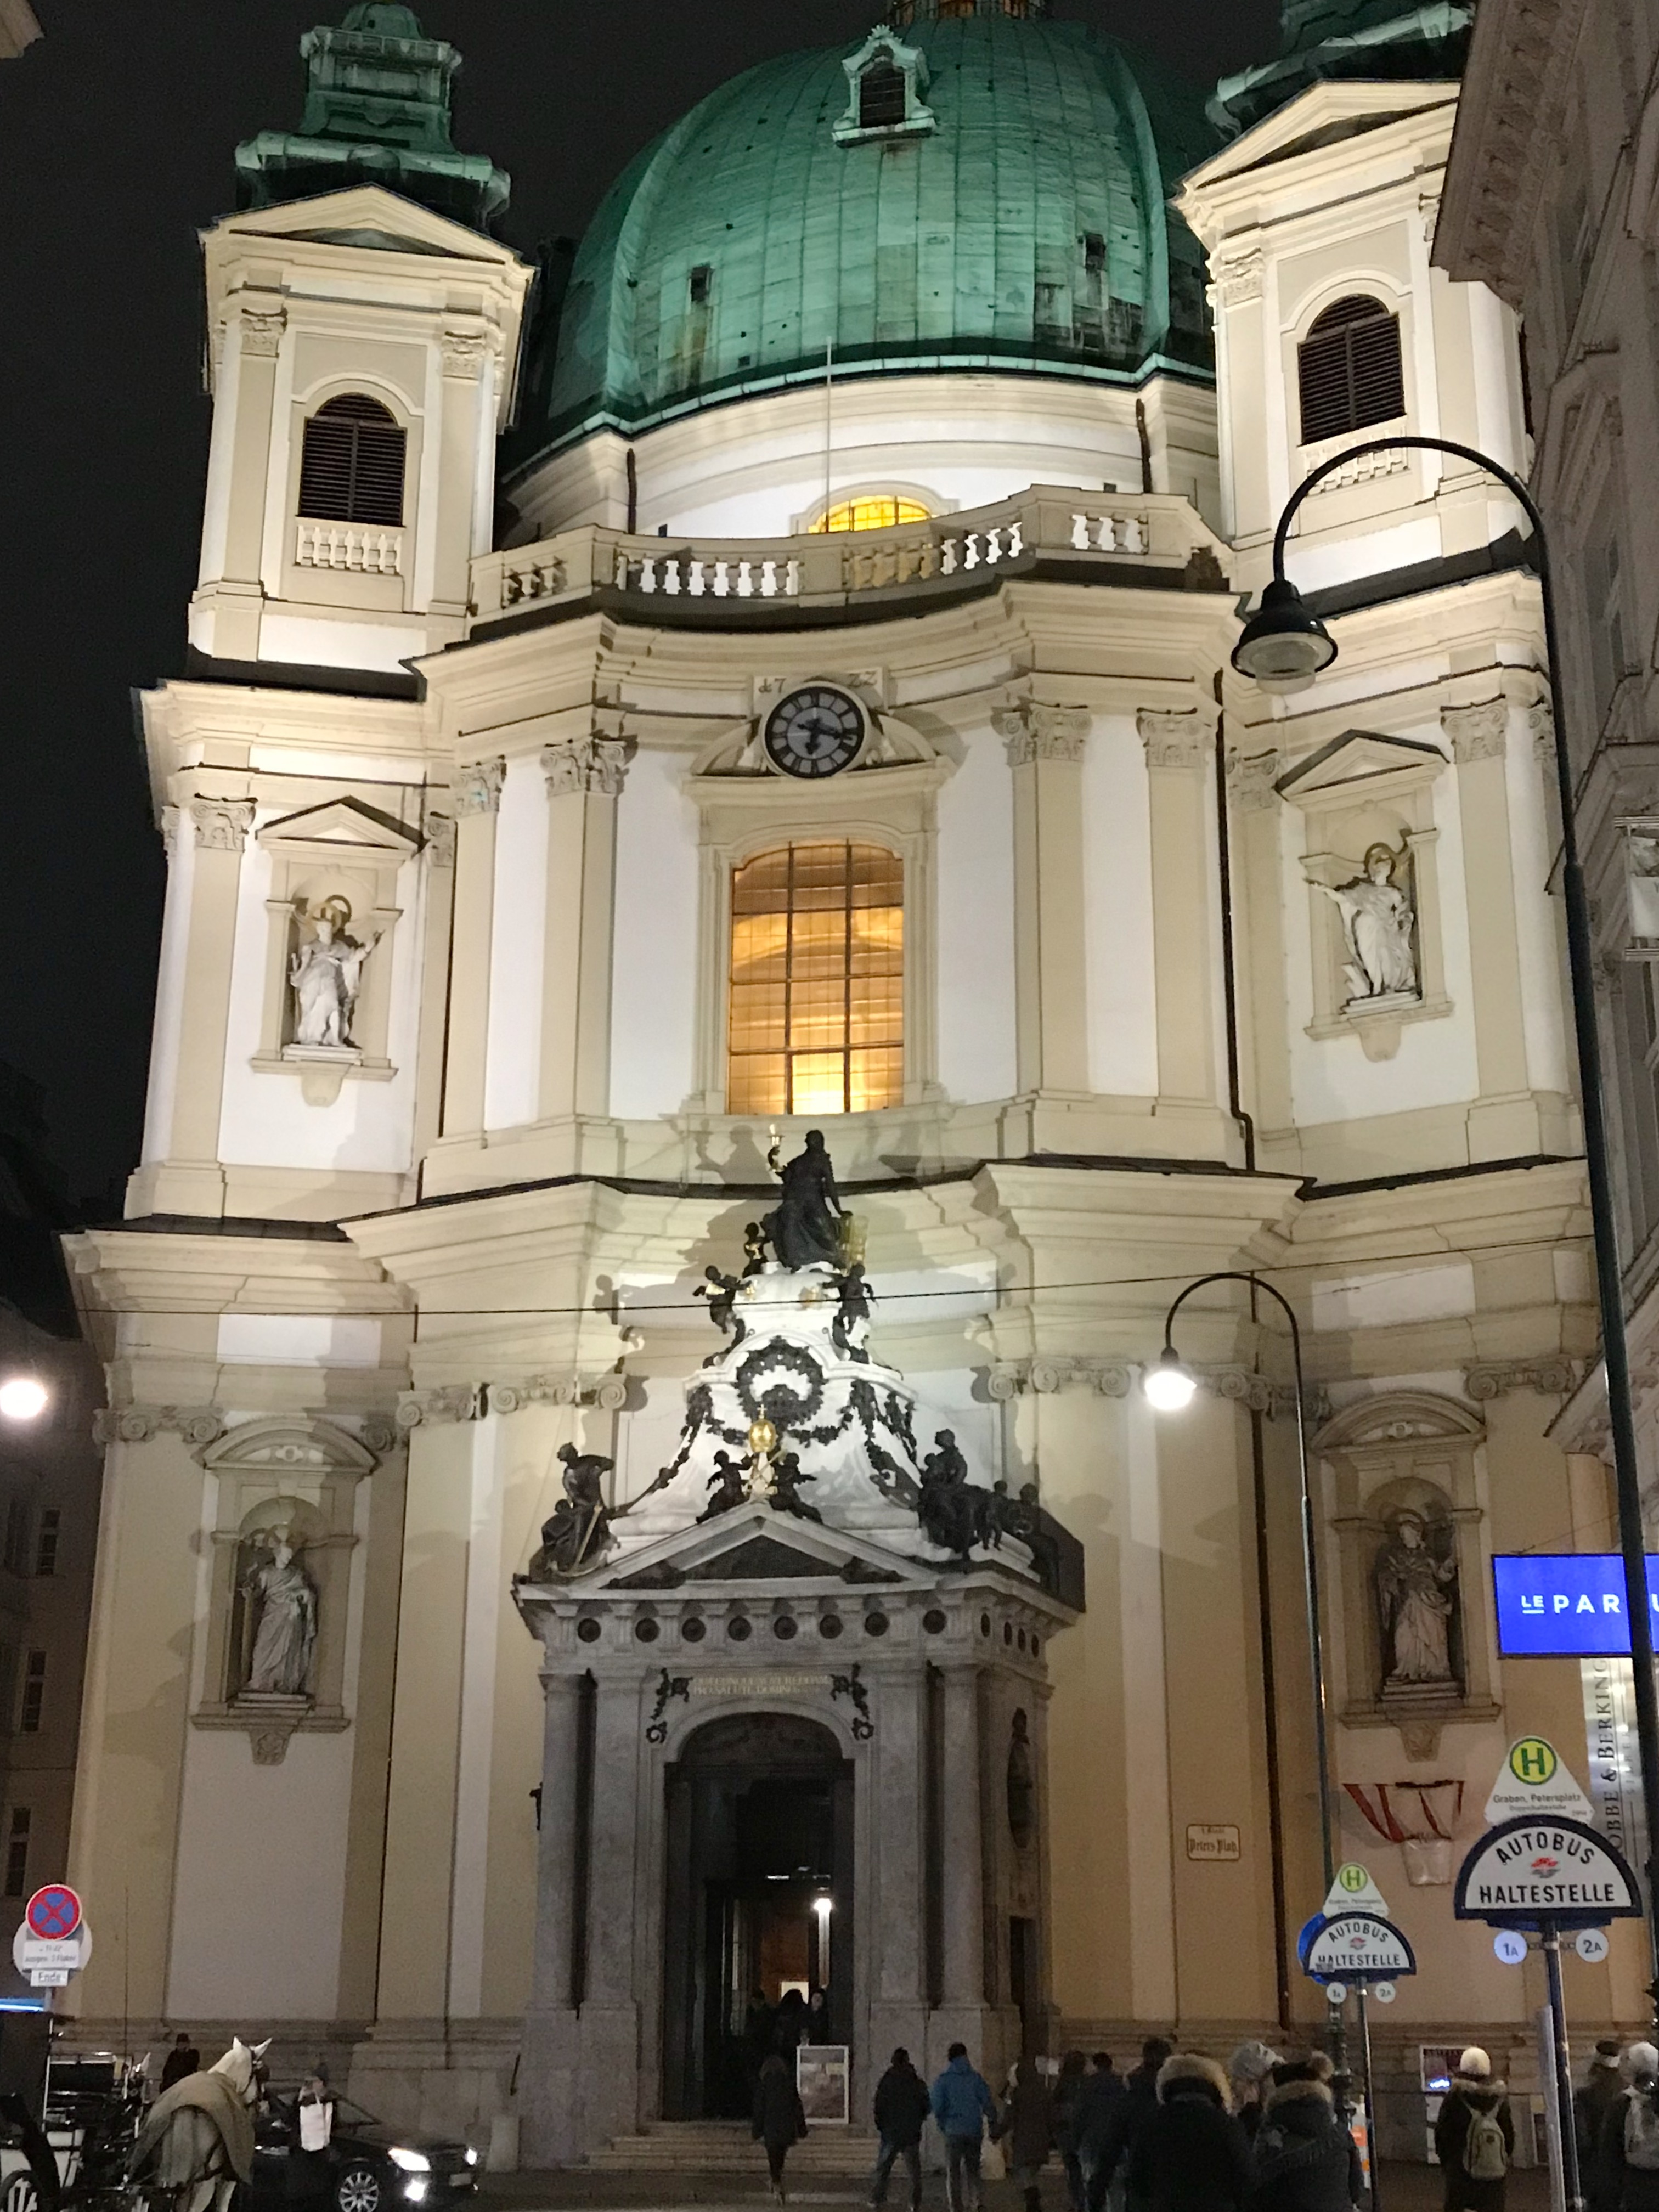 Vienna at night